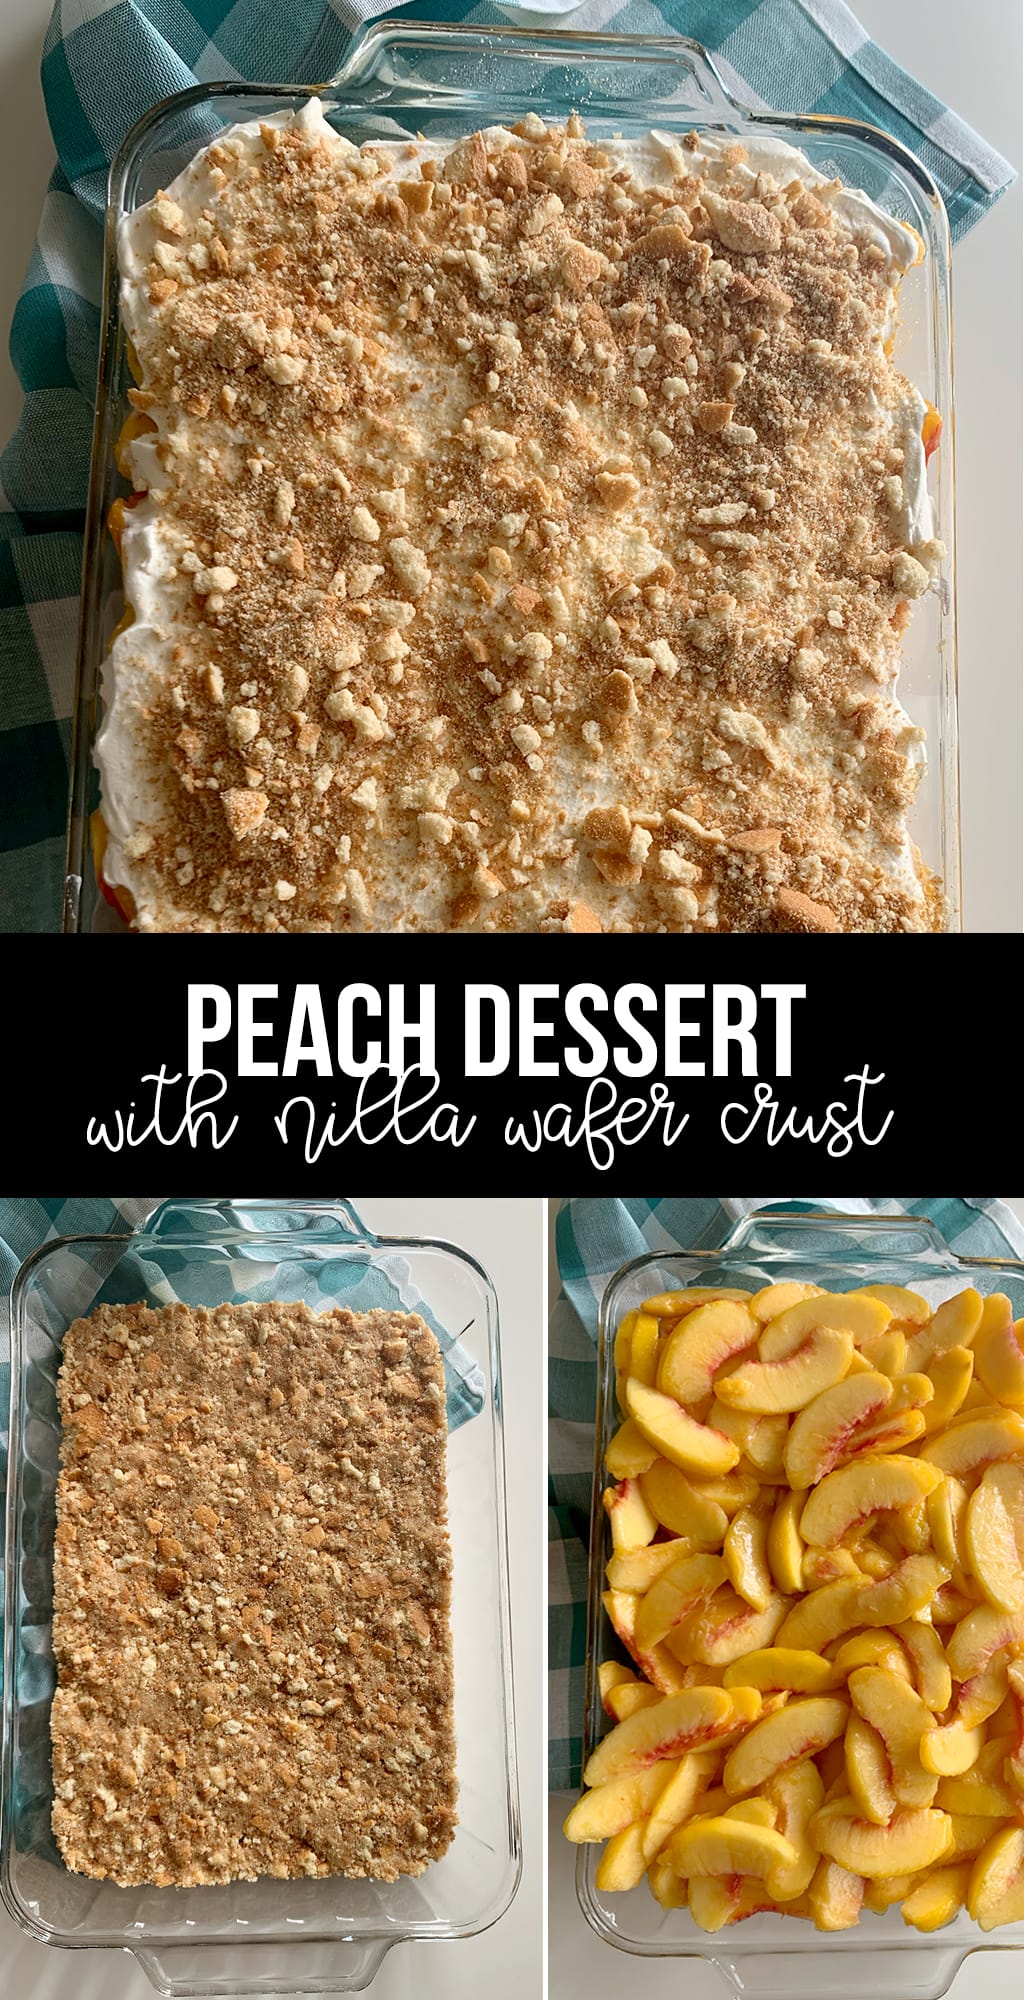 peach dessert with nilla wafer crust